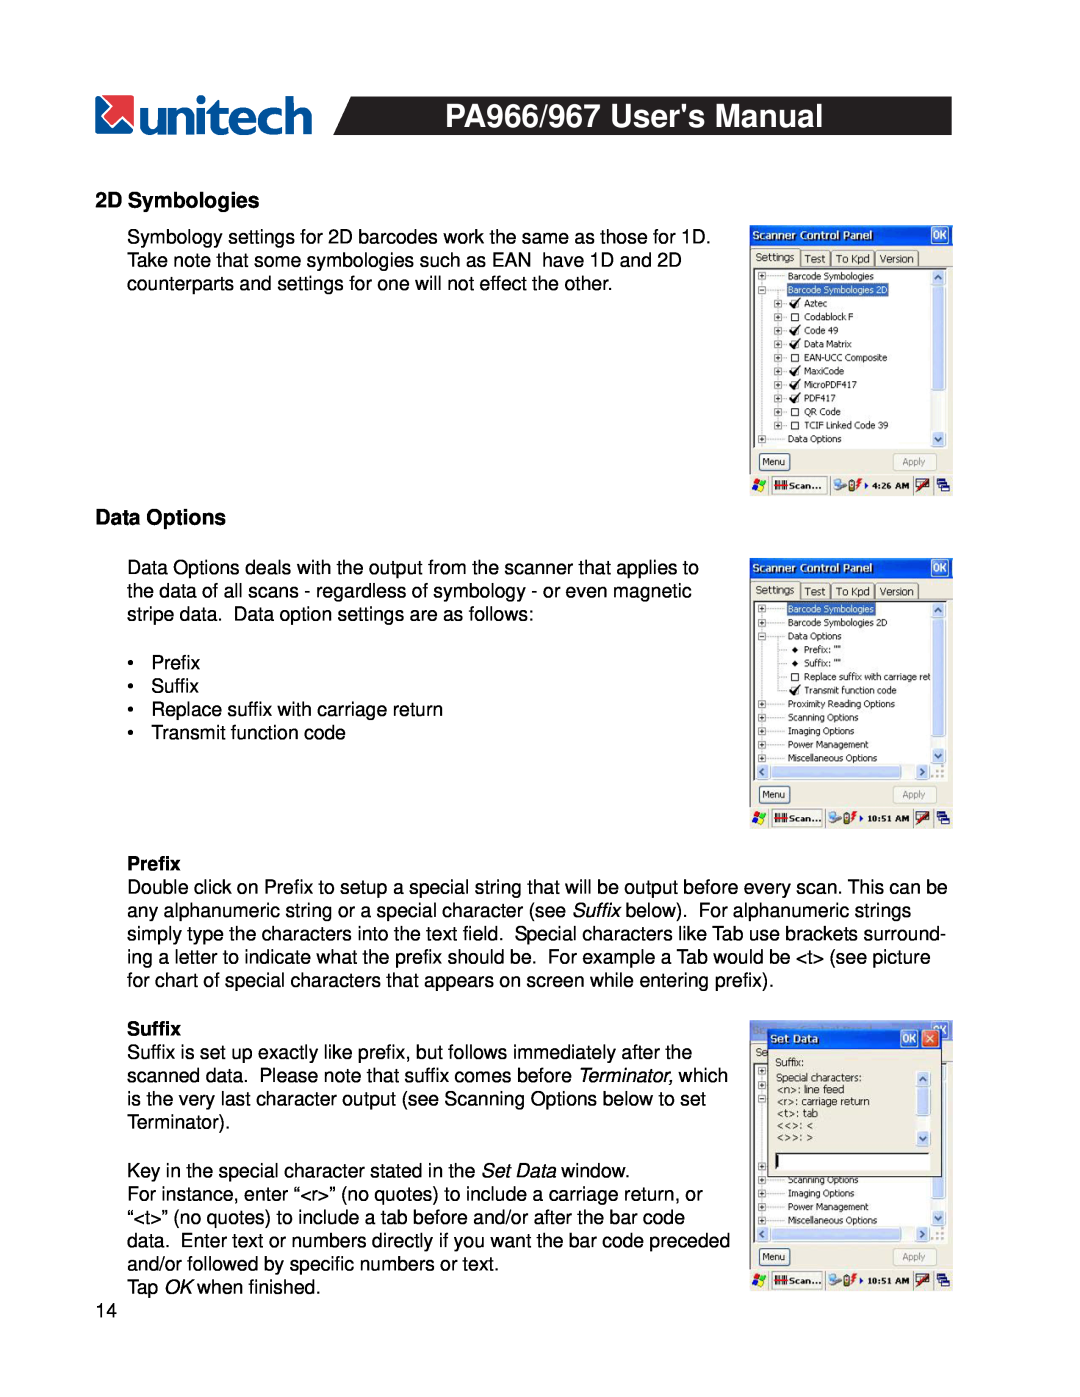 Unitech PA967, PA966 user manual 2D Symbologies, Data Options, Prefix, Suffix 